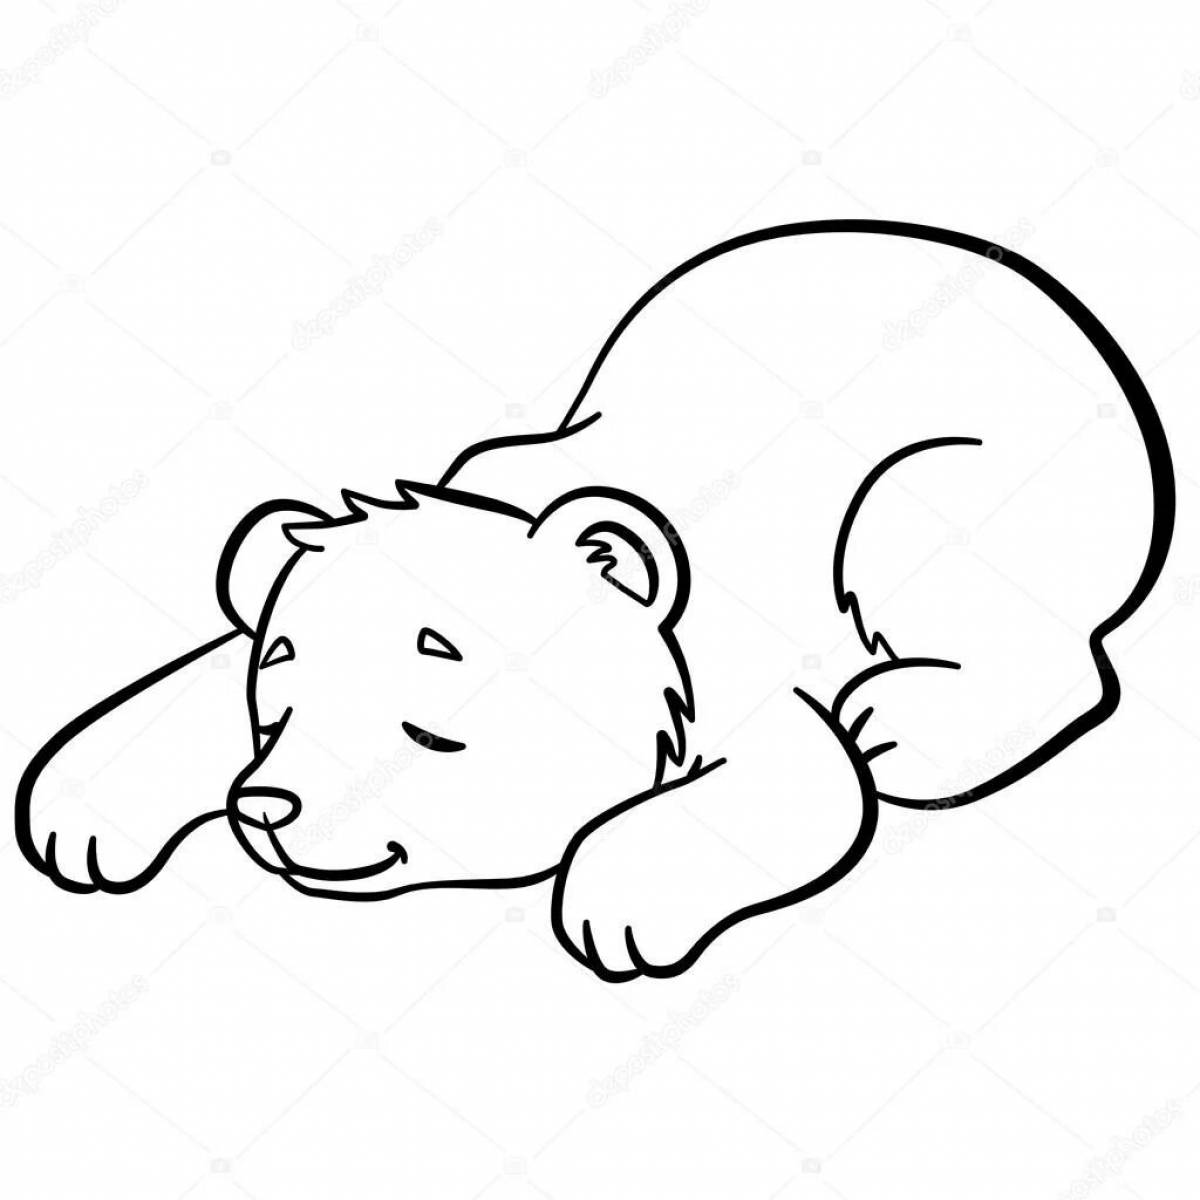 Radiant coloring page: почему медведи спят зимой?